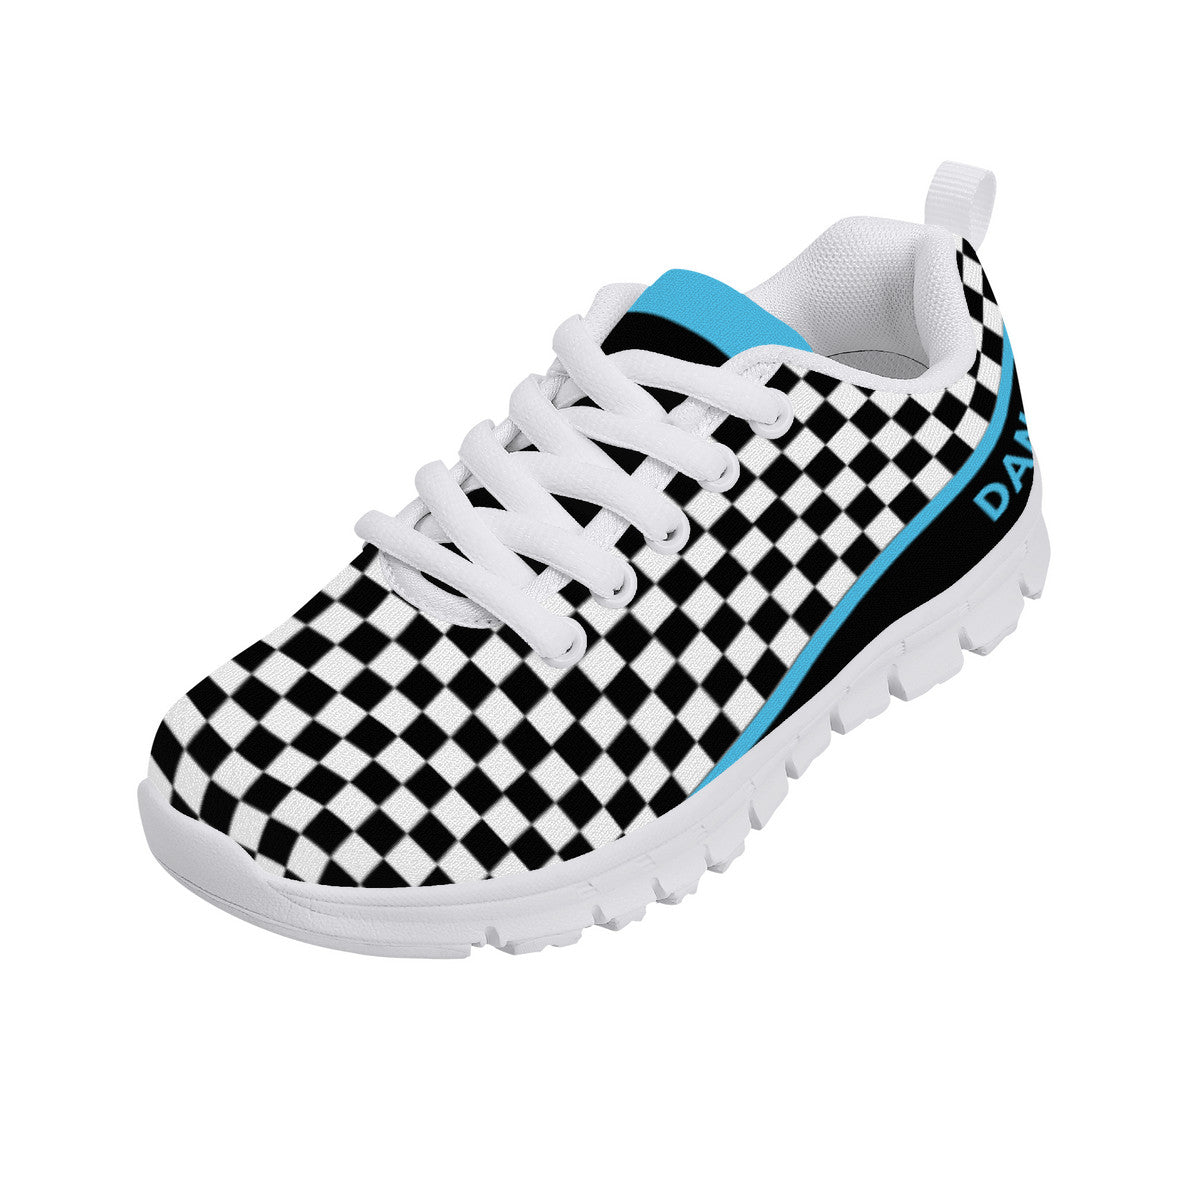 Kids Dance Sneakers - Checkered Black - White - Blue